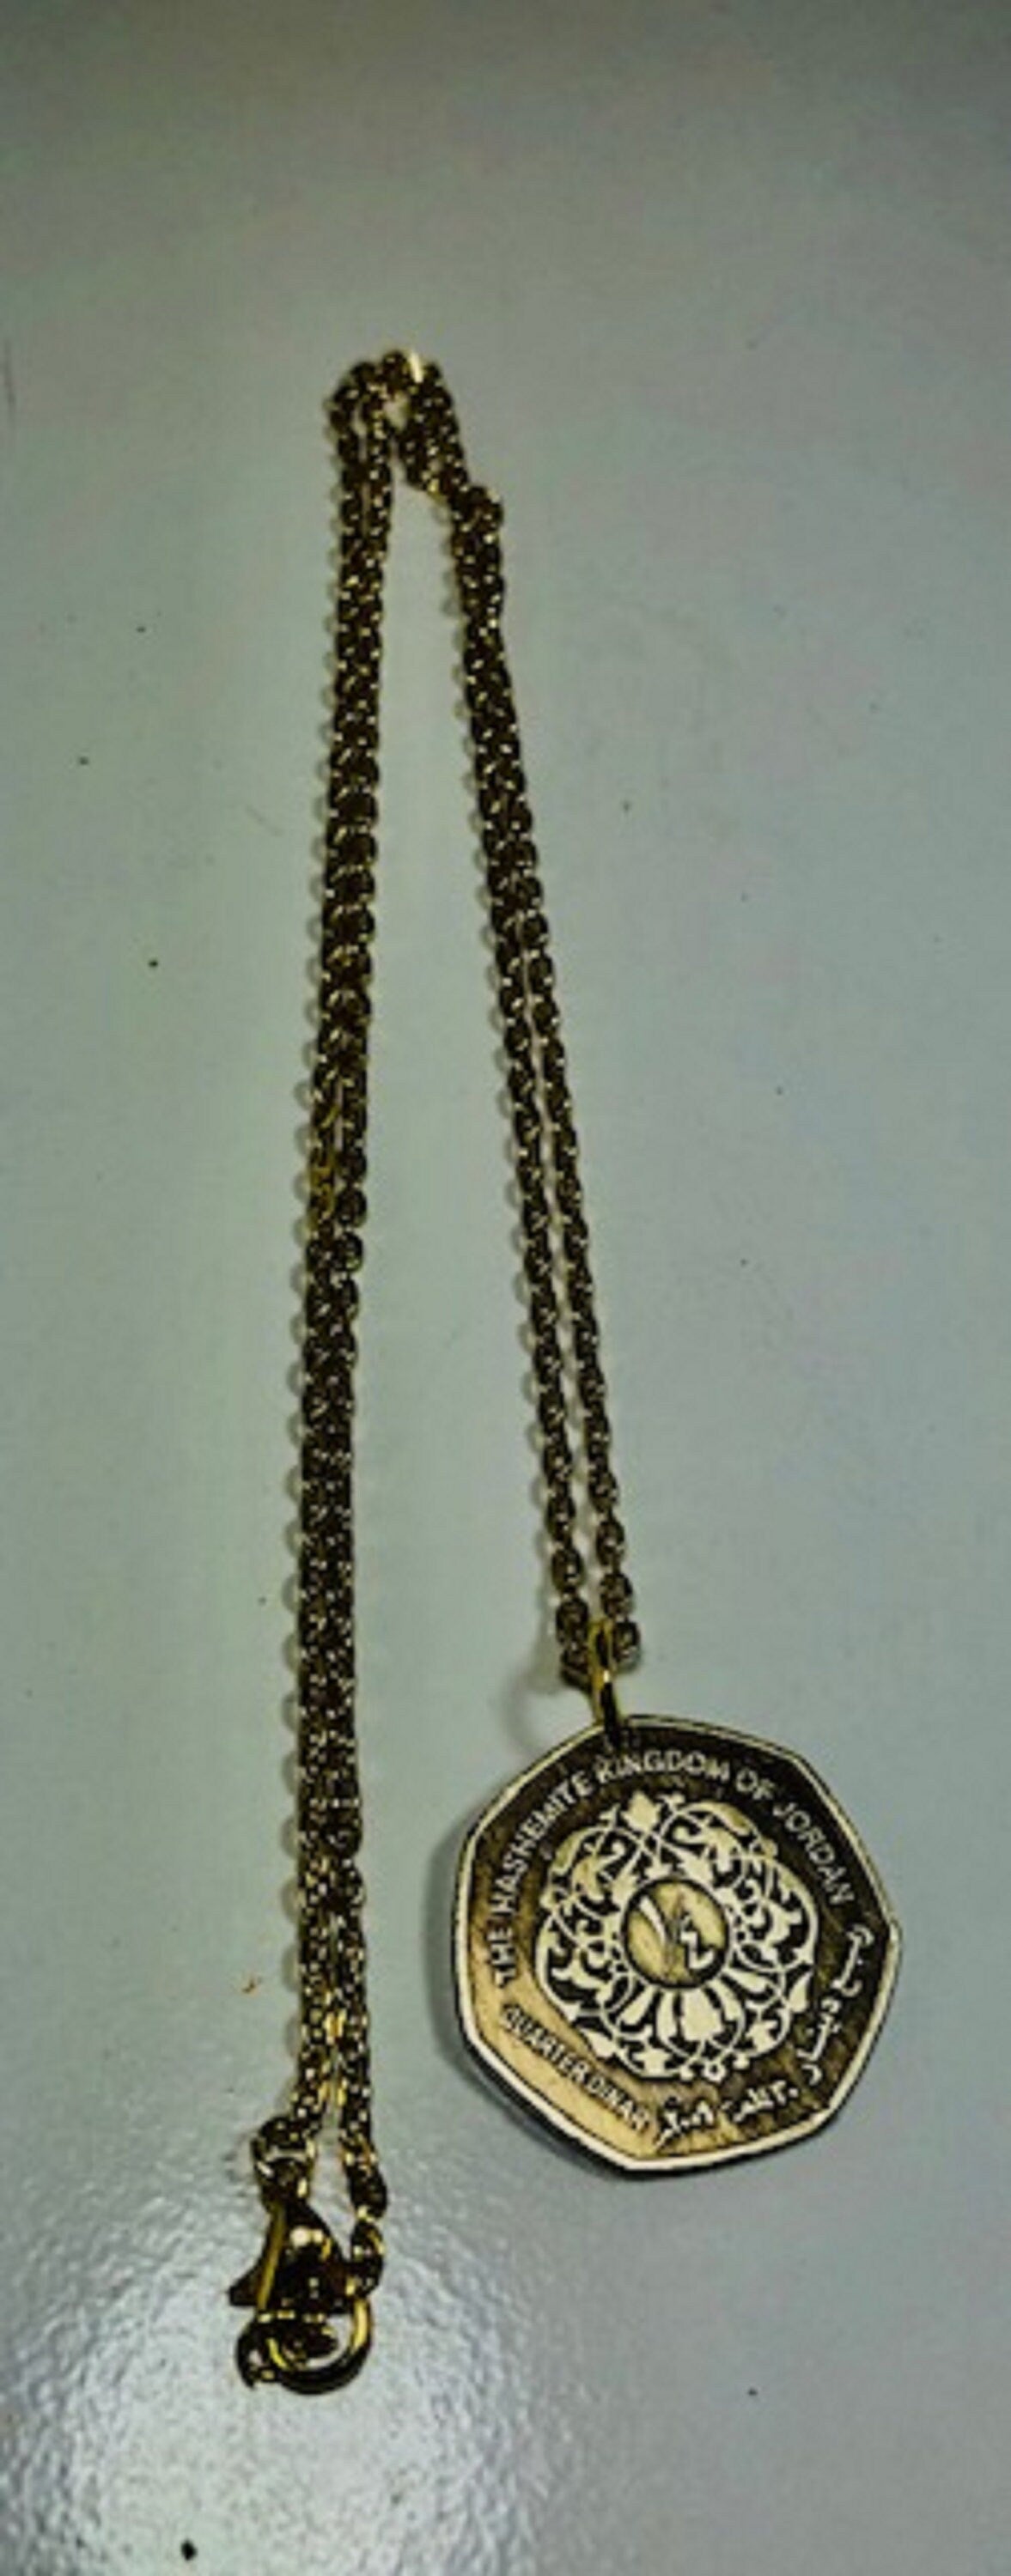 Kingdom of Jordan Coin Pendant Vintage Quarter Dinar Necklace Custom Made Rare coins - Coin Enthusiast Fashion Accessory Handmade